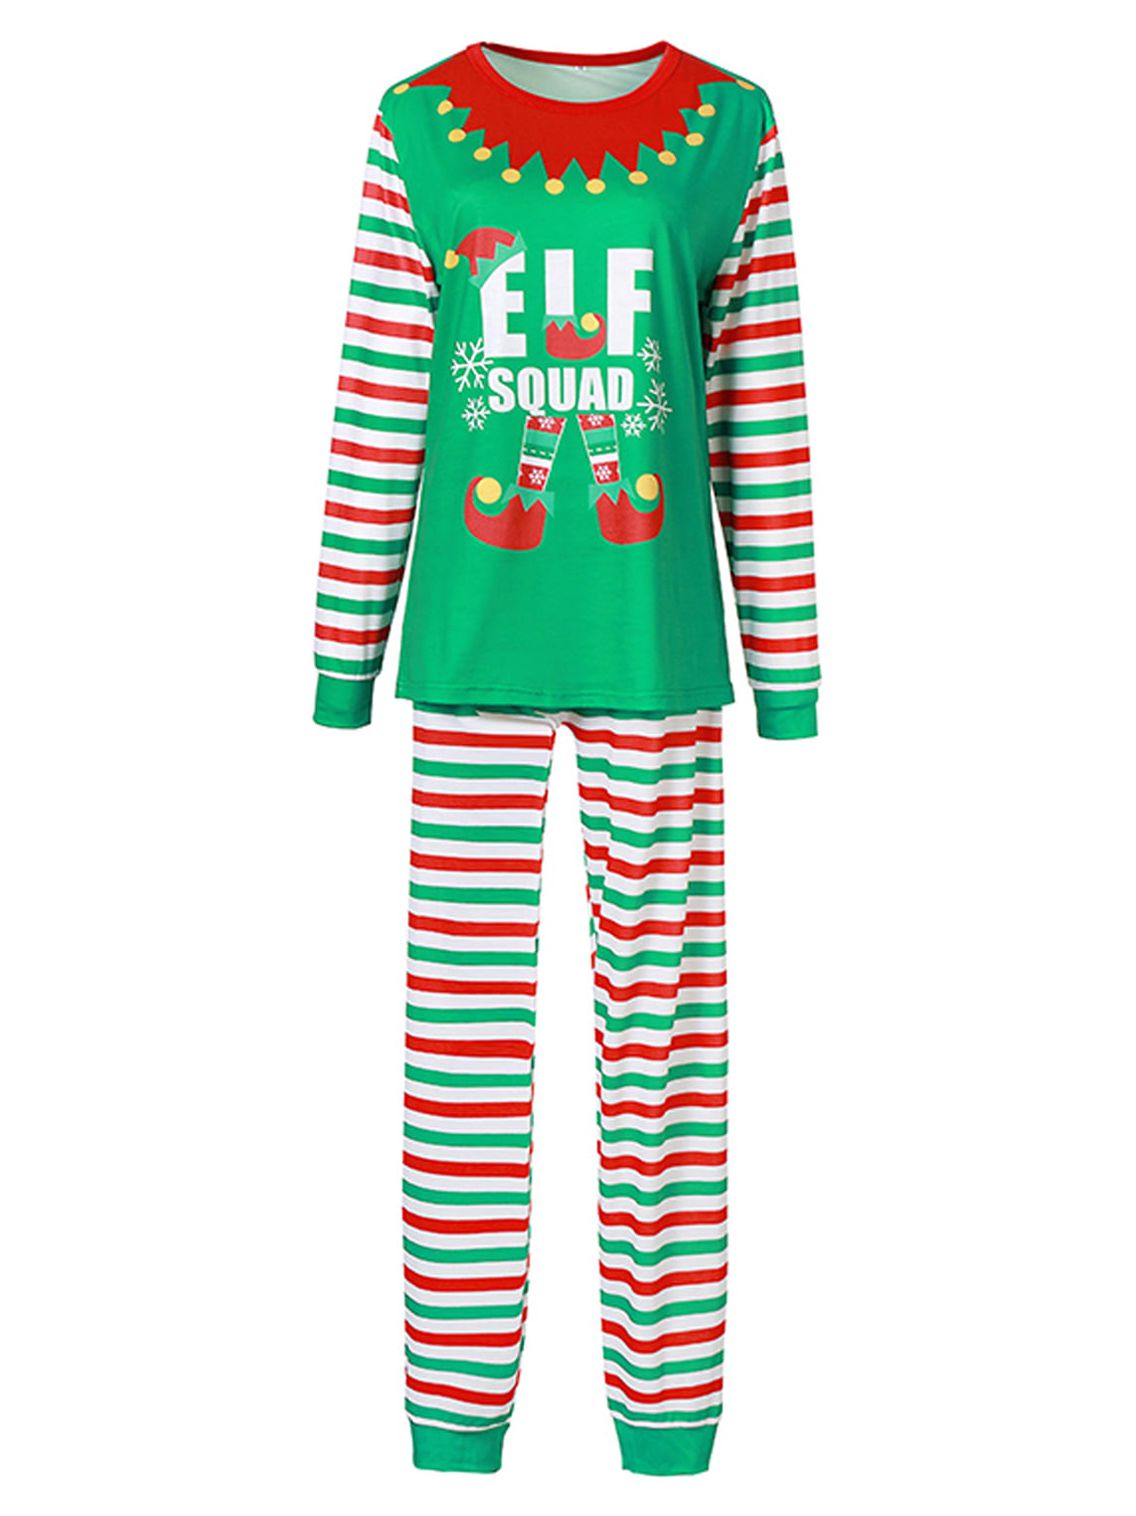 Aunavey Matching Family Christmas Pajamas Sets Holiday PJ's with ELF Printing Loungewear Sleepwear - image 2 of 6